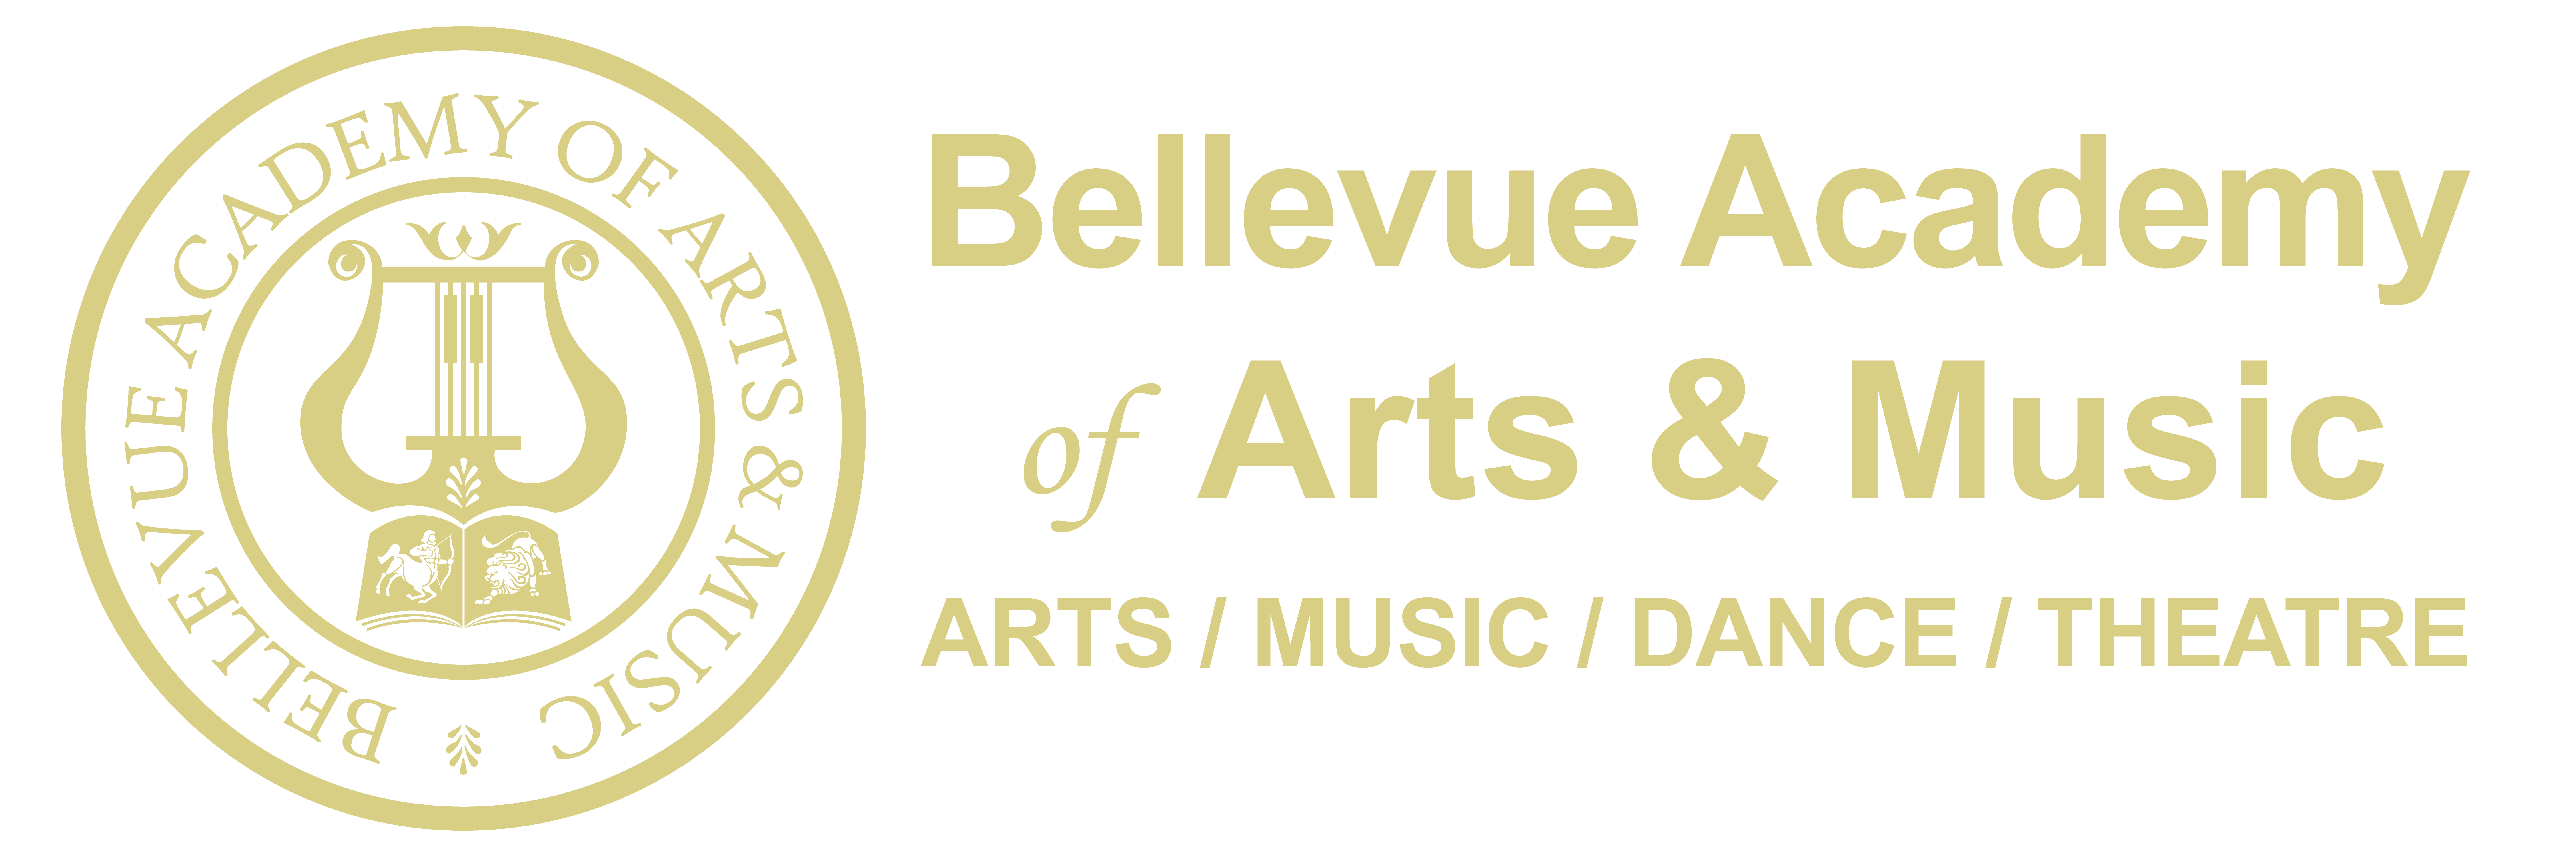 Bellevue Academy of Arts & Music